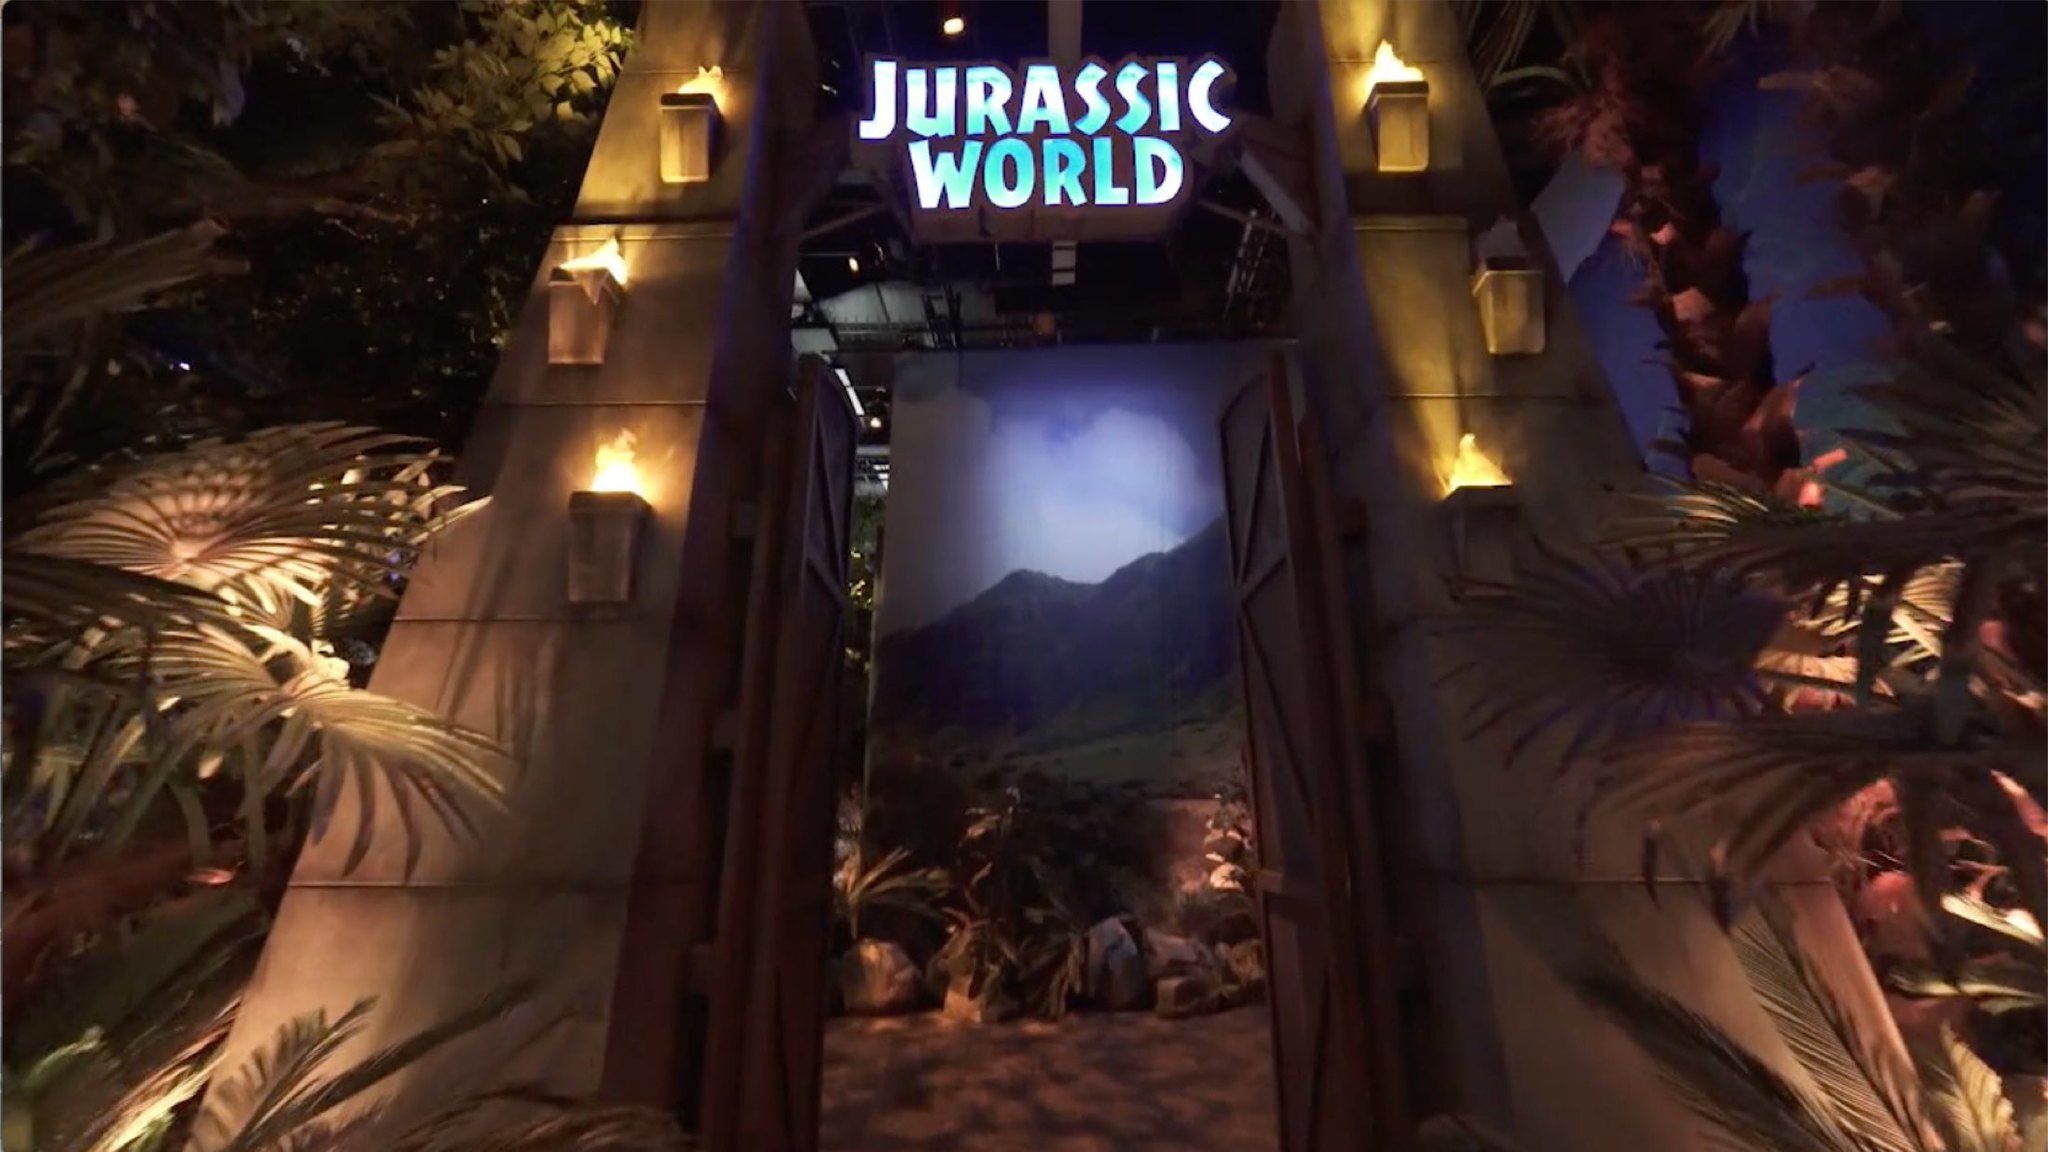 Jurassic World The Exhibition projectnerd.it